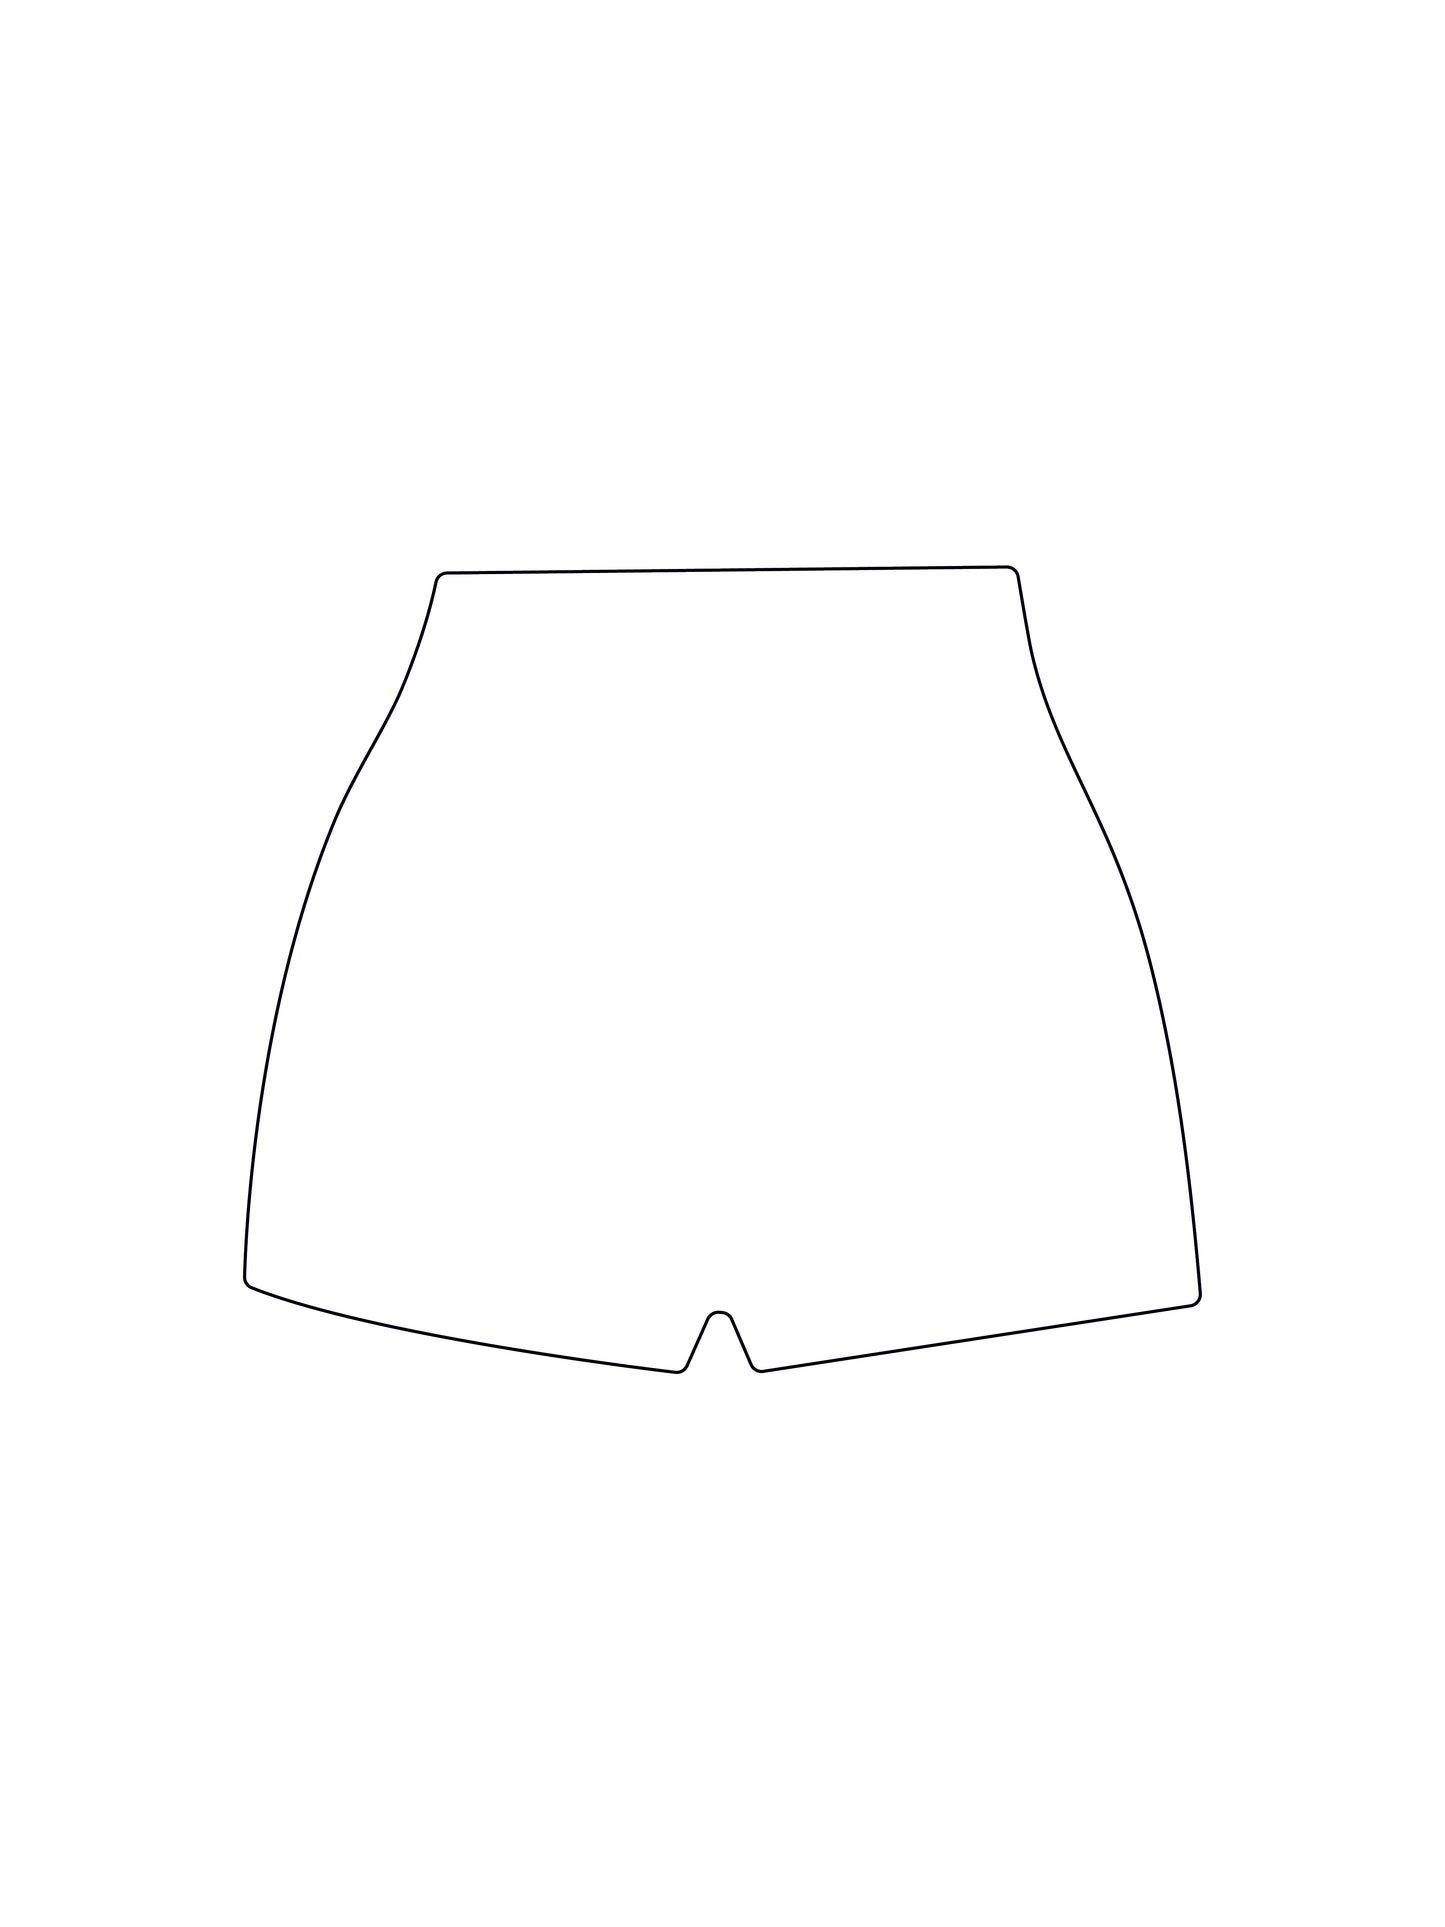 Custom short shorts (inc mesh options)